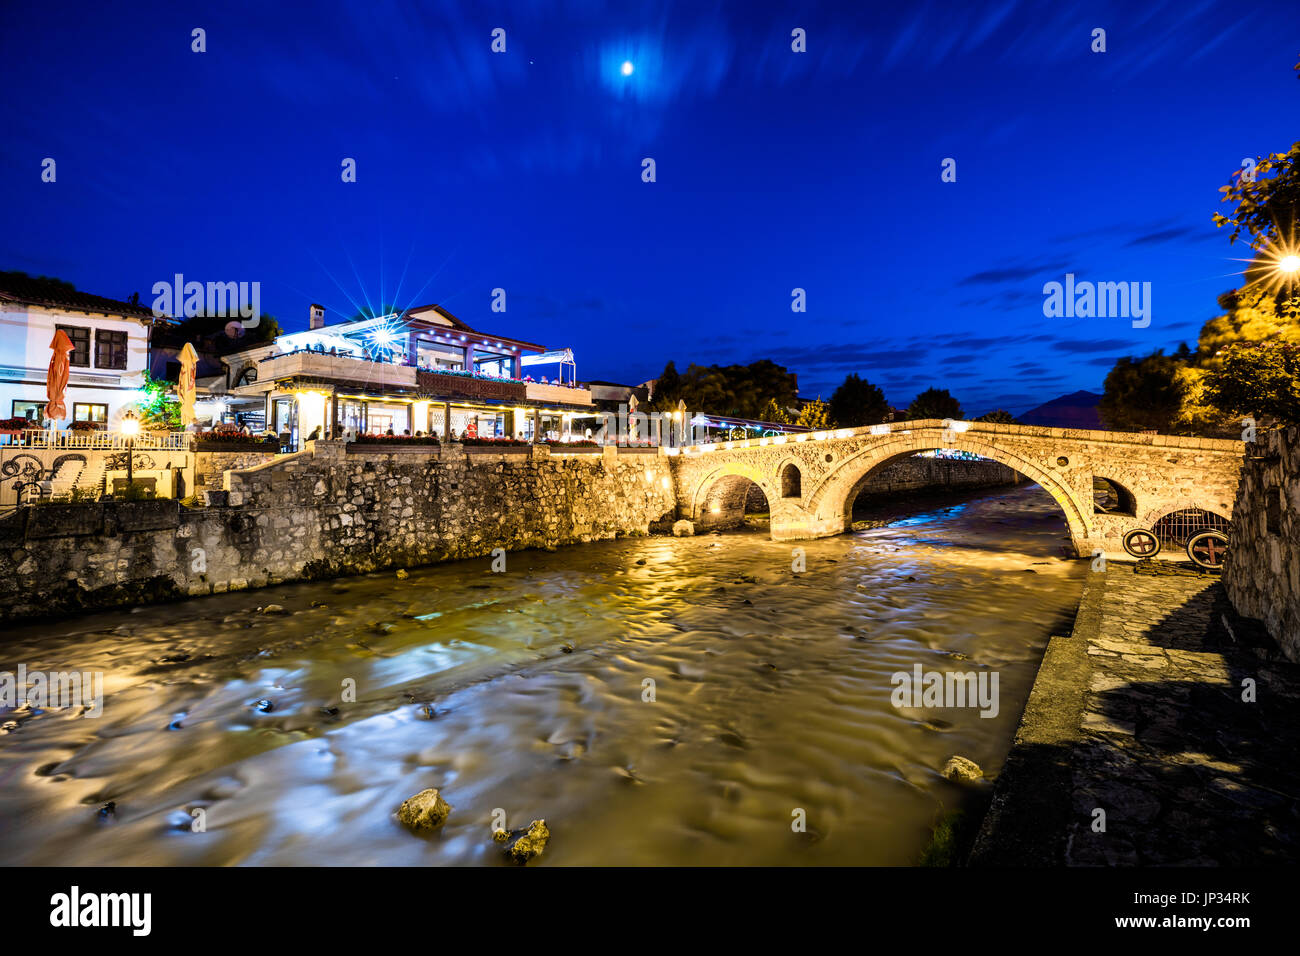 Europe, Kosovo, Prizren, Historic city on banks of Prizren Bistrica river, Old Stone Bridge, Ura e gurit, Стари камени мост, Stari kameni most Stock Photo